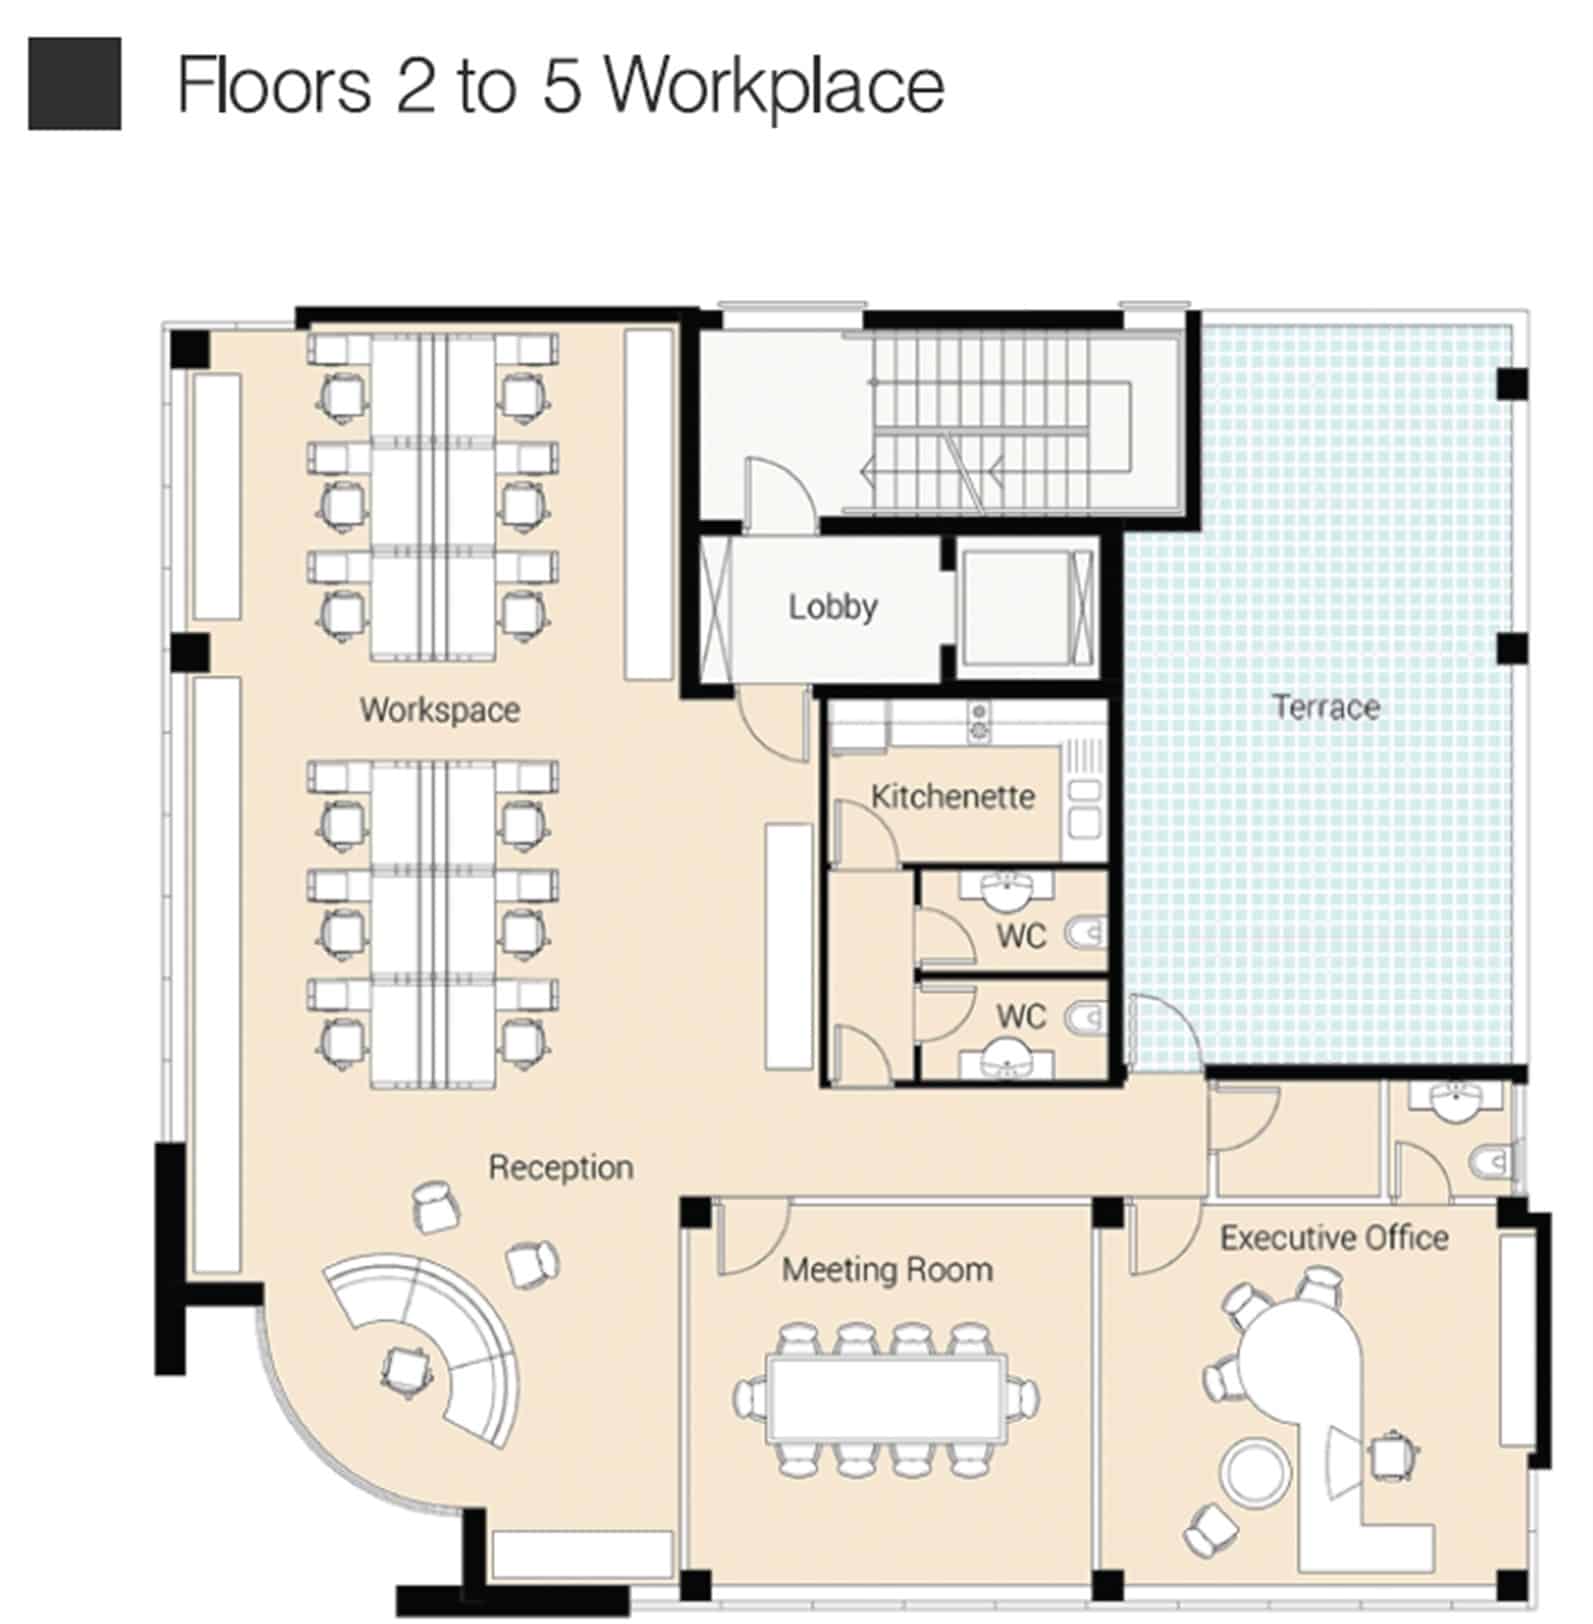 Floors 2-5